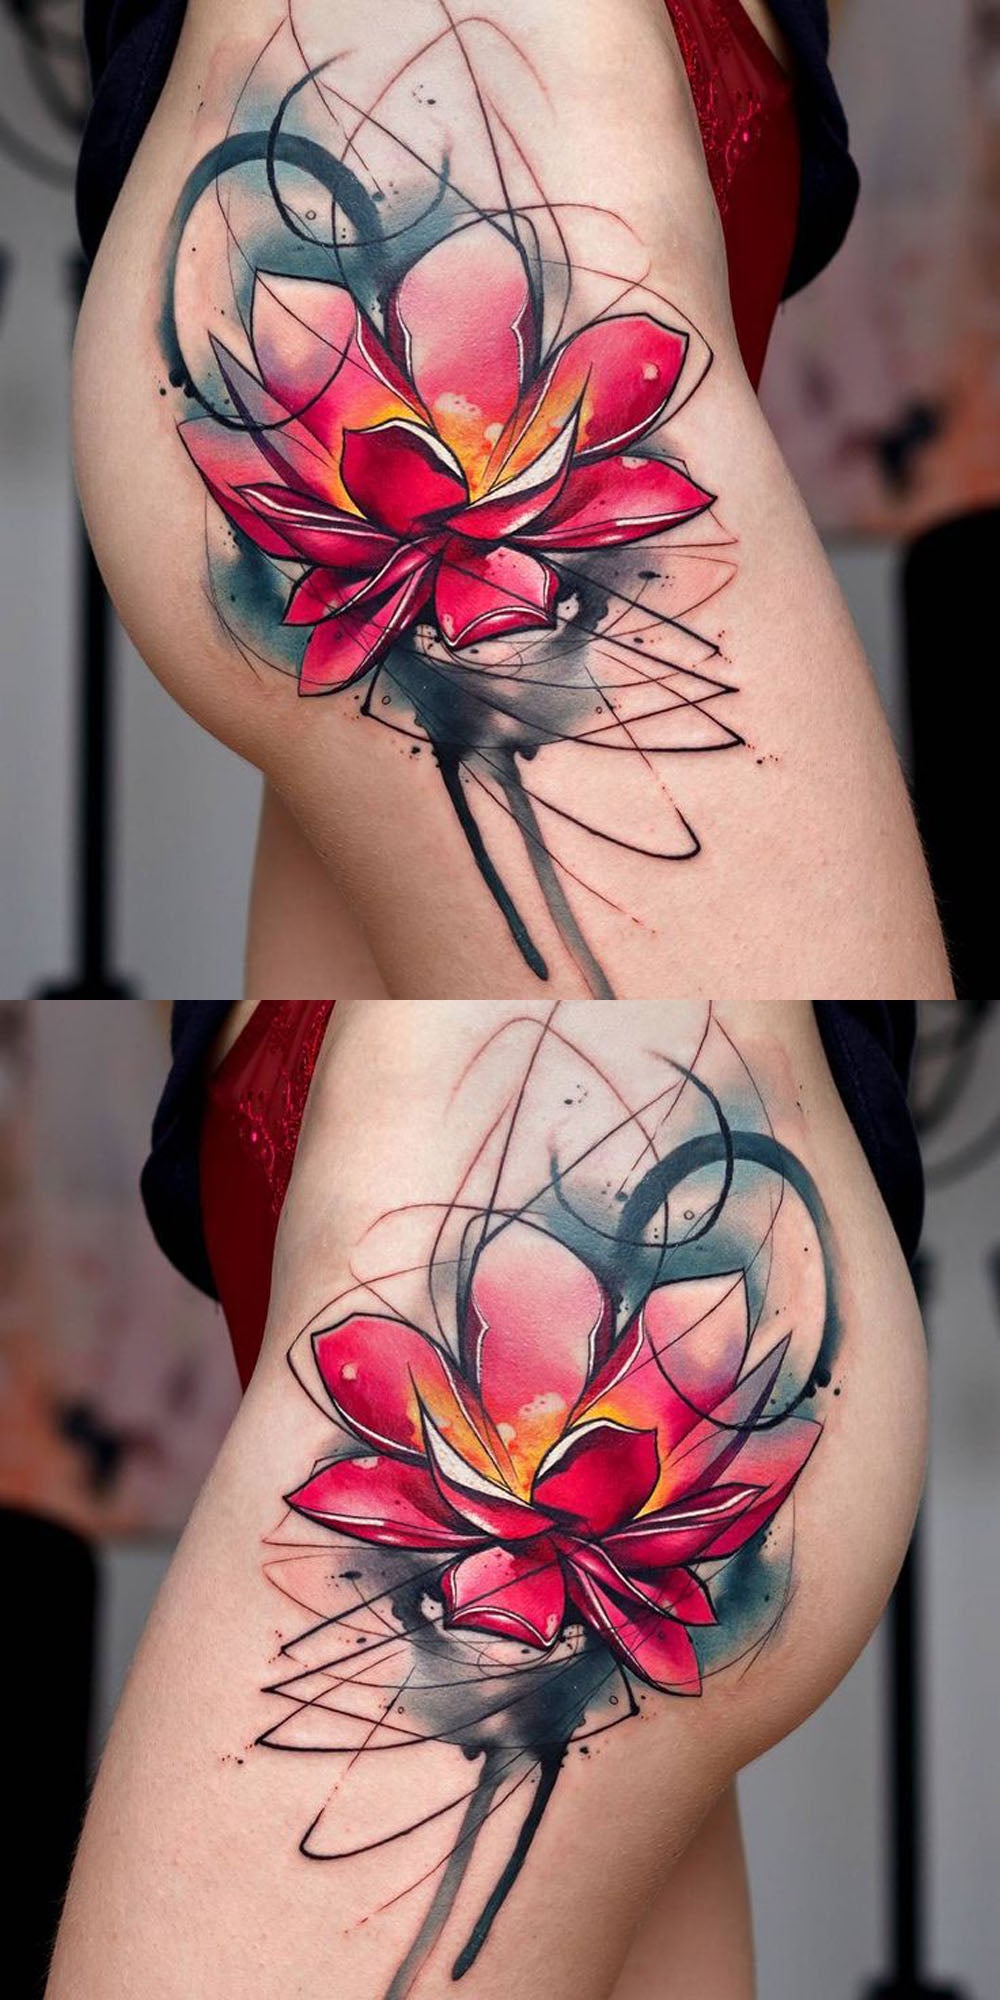 Popular Watercolor Lily Lotus Side Thigh Hip Tattoo Ideas for Women -  ideas de tatuaje de cadera de loto para las mujeres - www.MyBodiArt.com